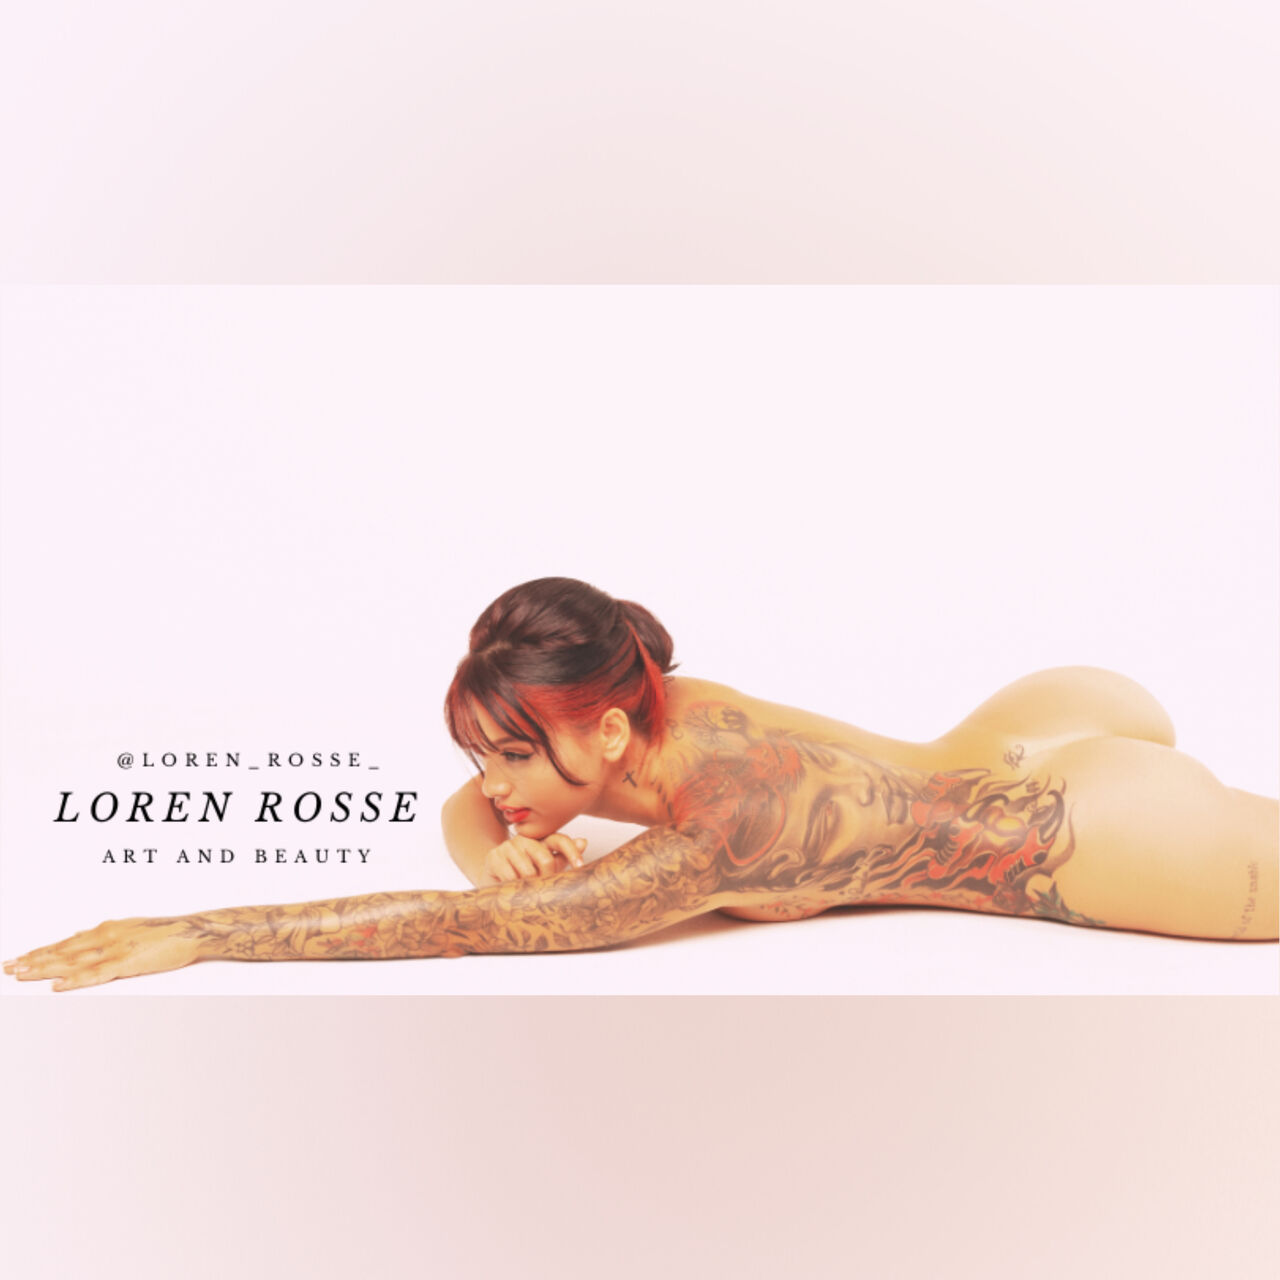 See loren rosse profile